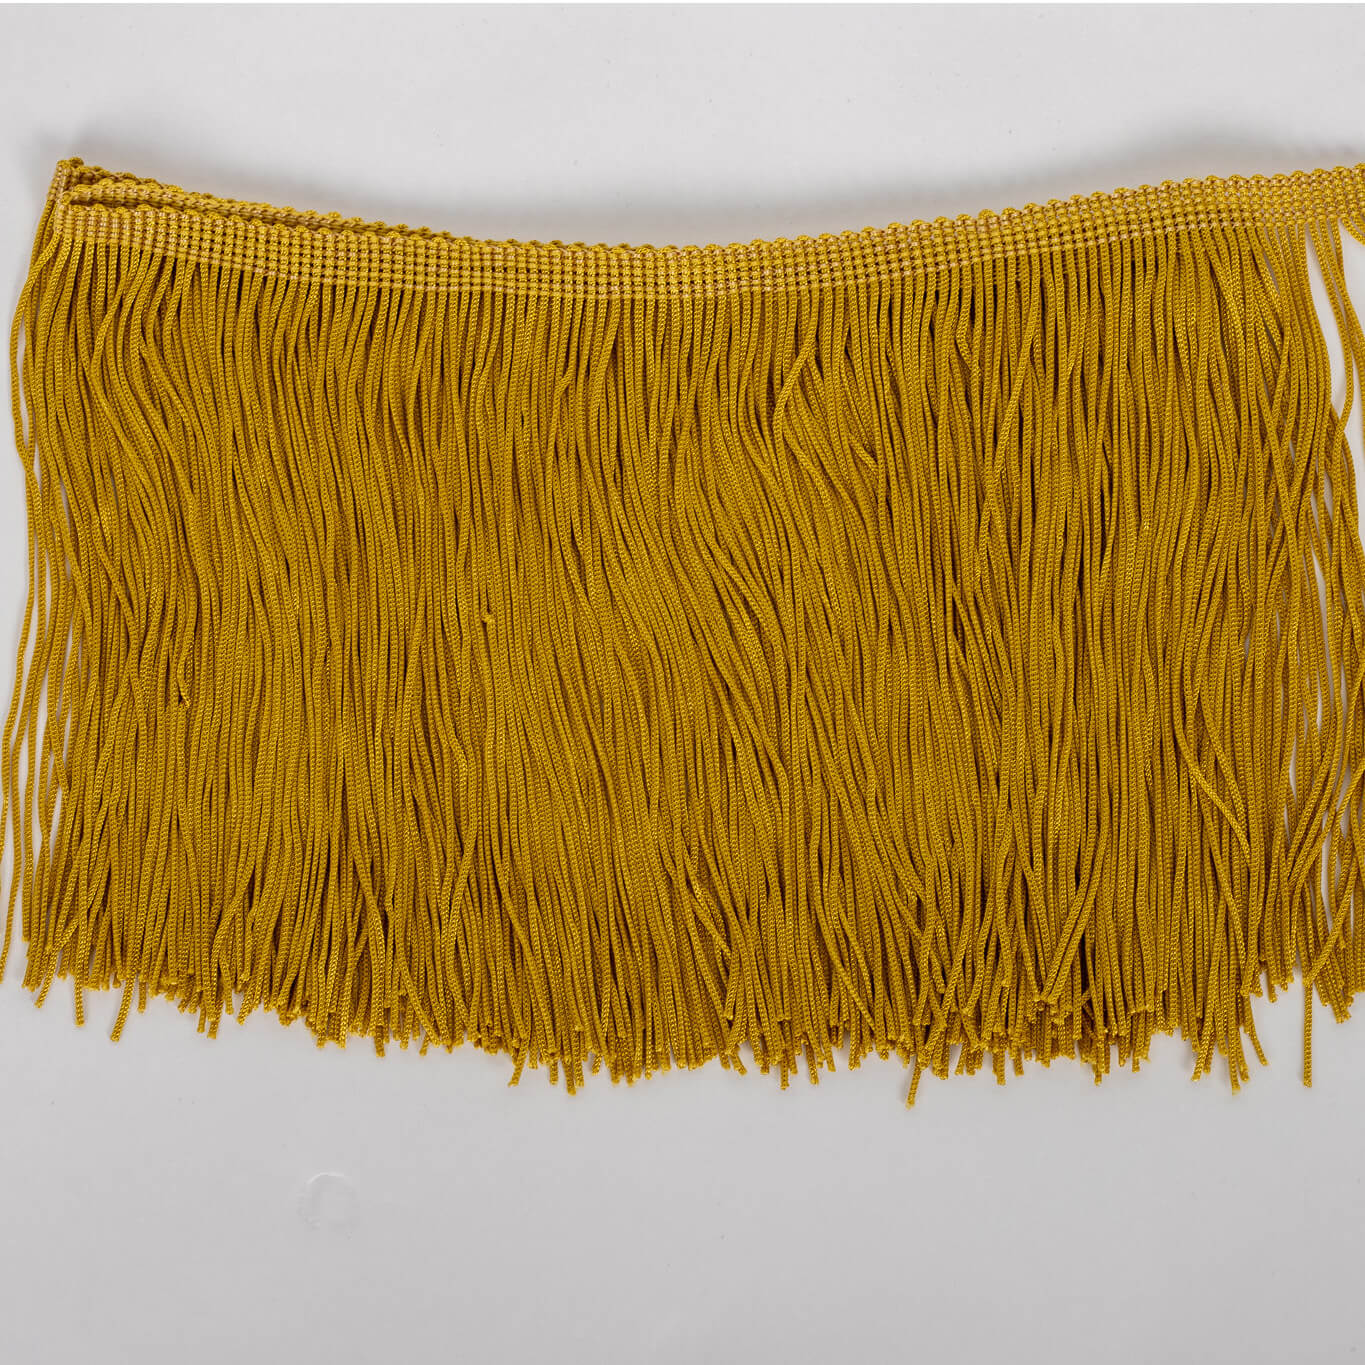 gold fringe 15cm for costumes